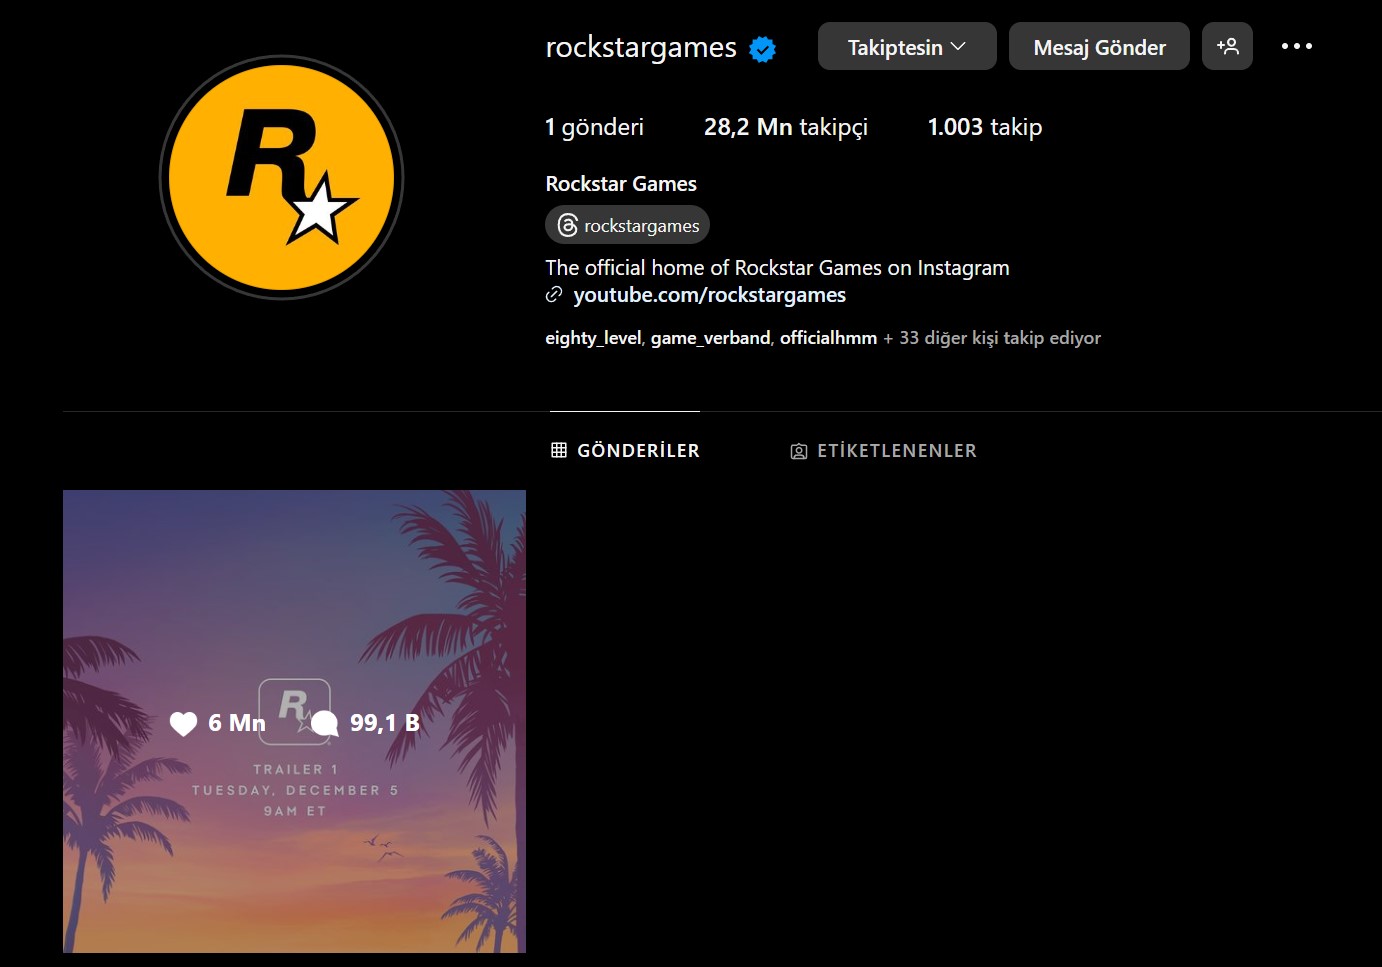 GTA VI - Grand Theft Auto 6 - Rockstar Games